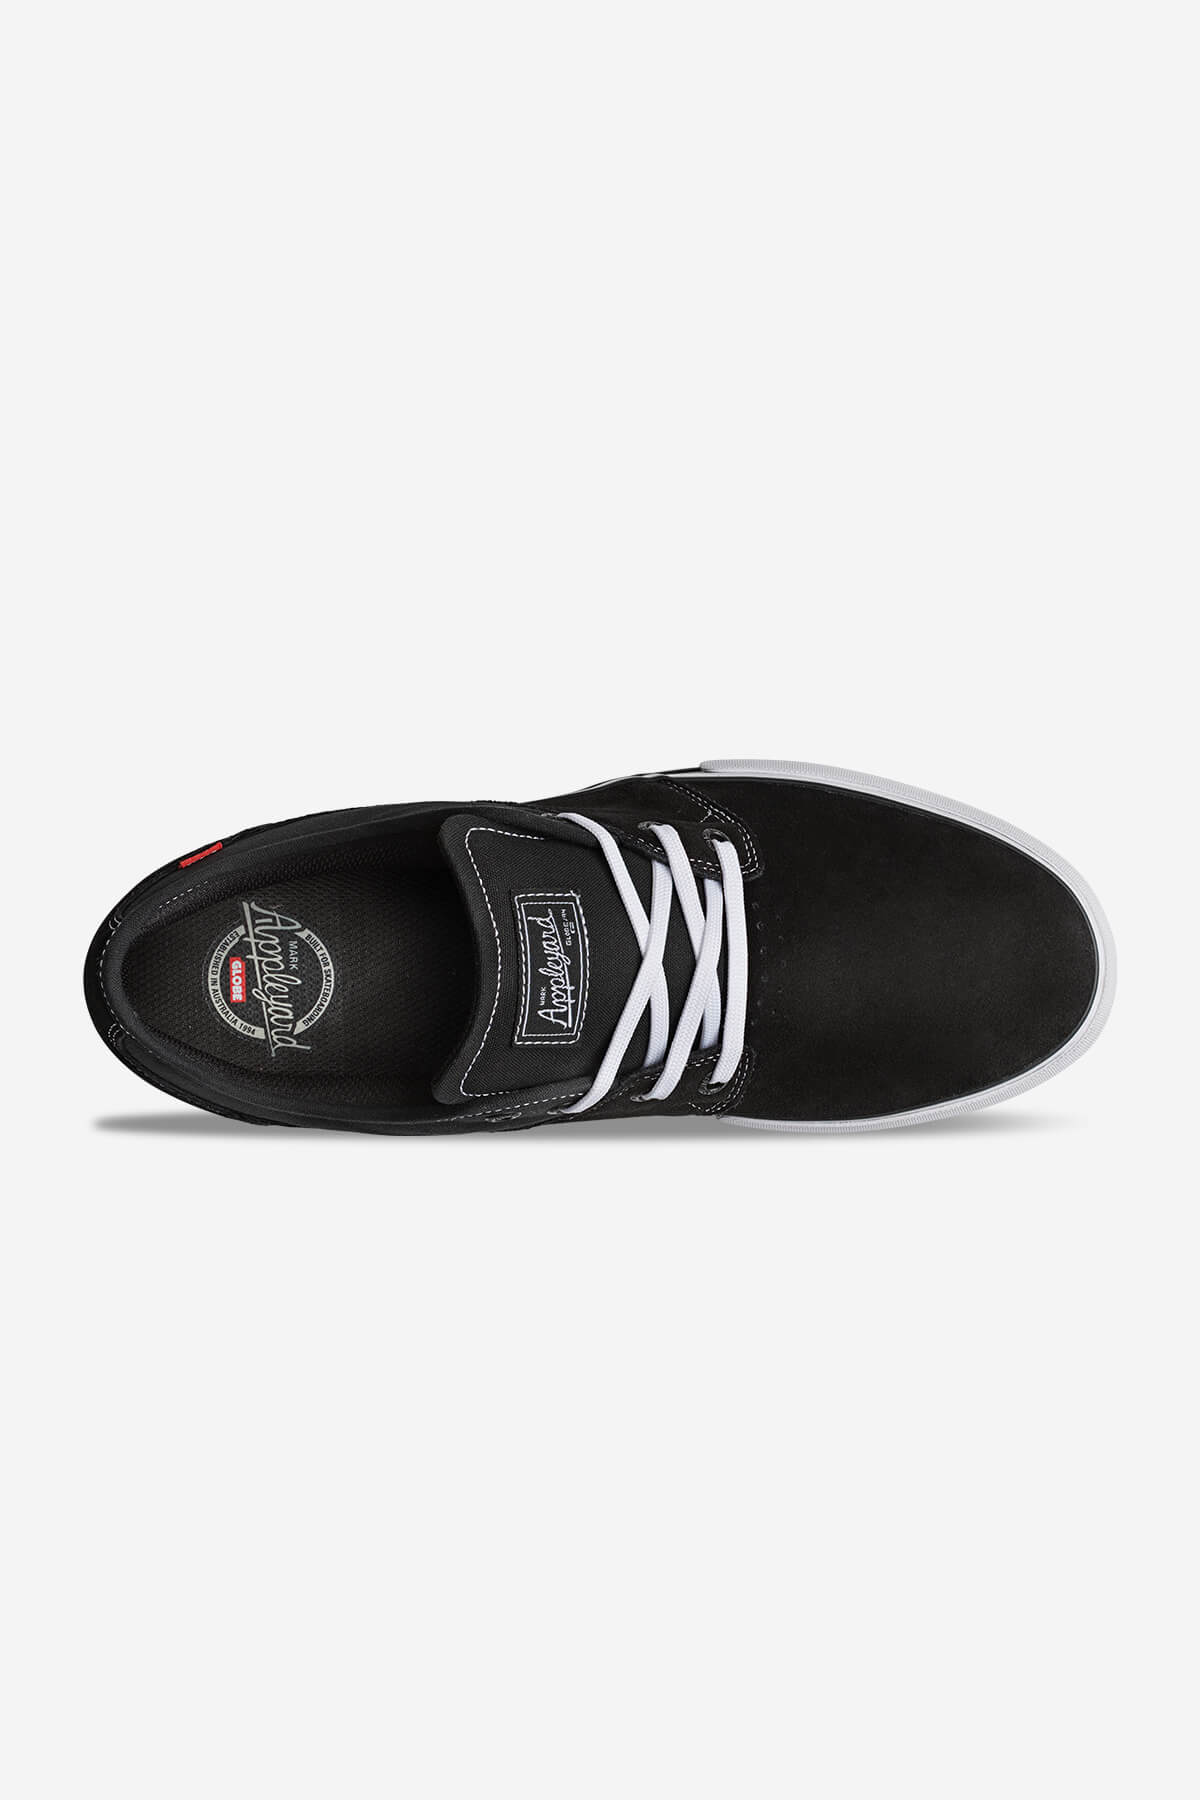 Globe Low shoes Mahalo - Black/Black/White in Black/Black/White